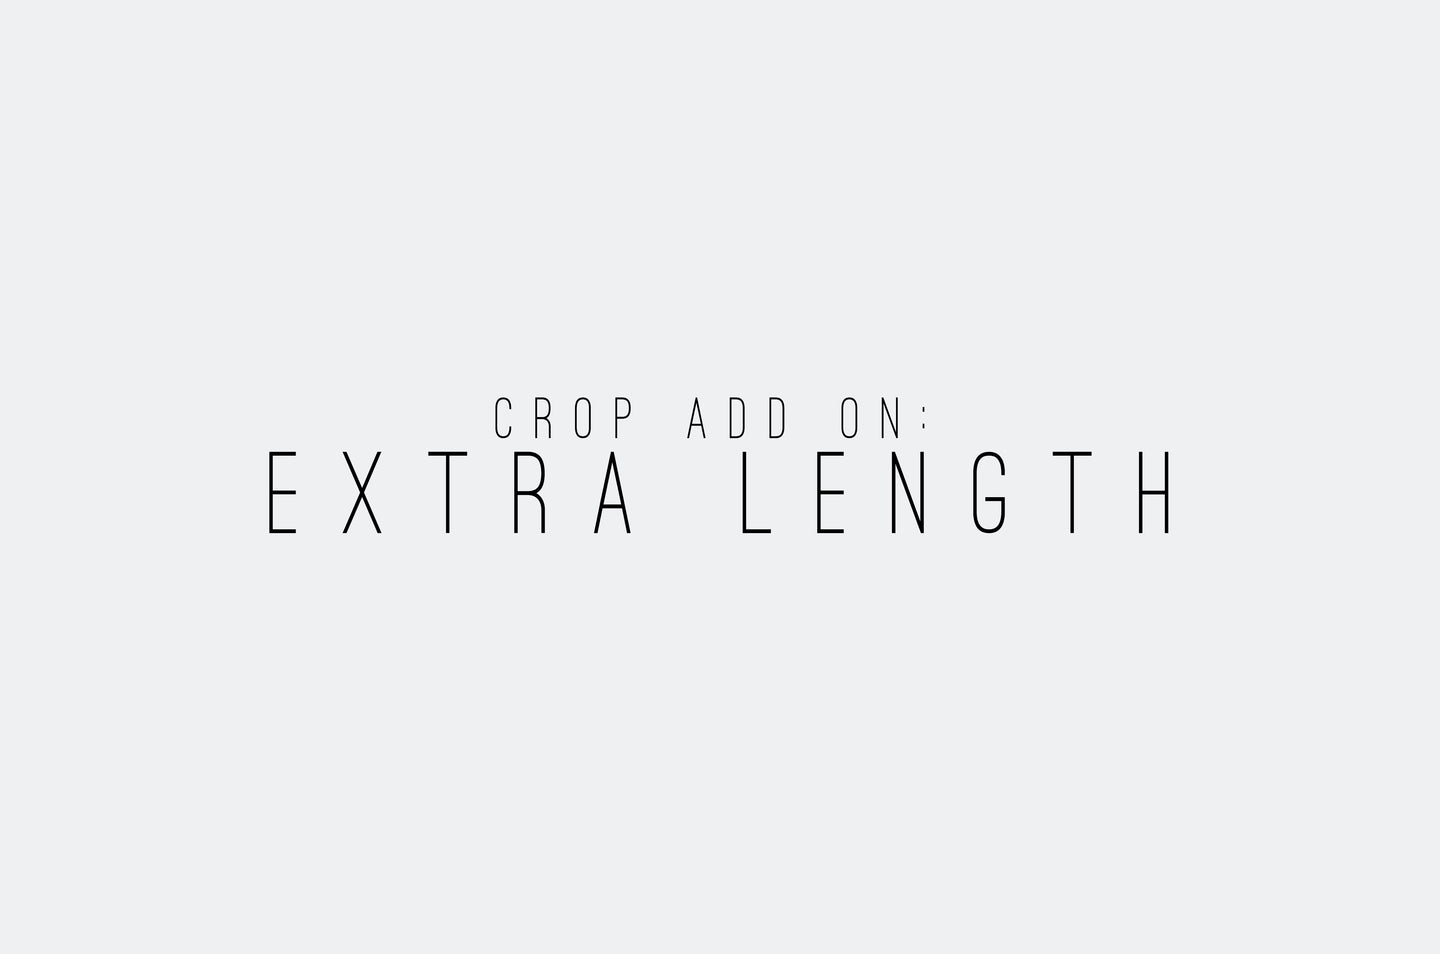 Crop Add On: Extra Length